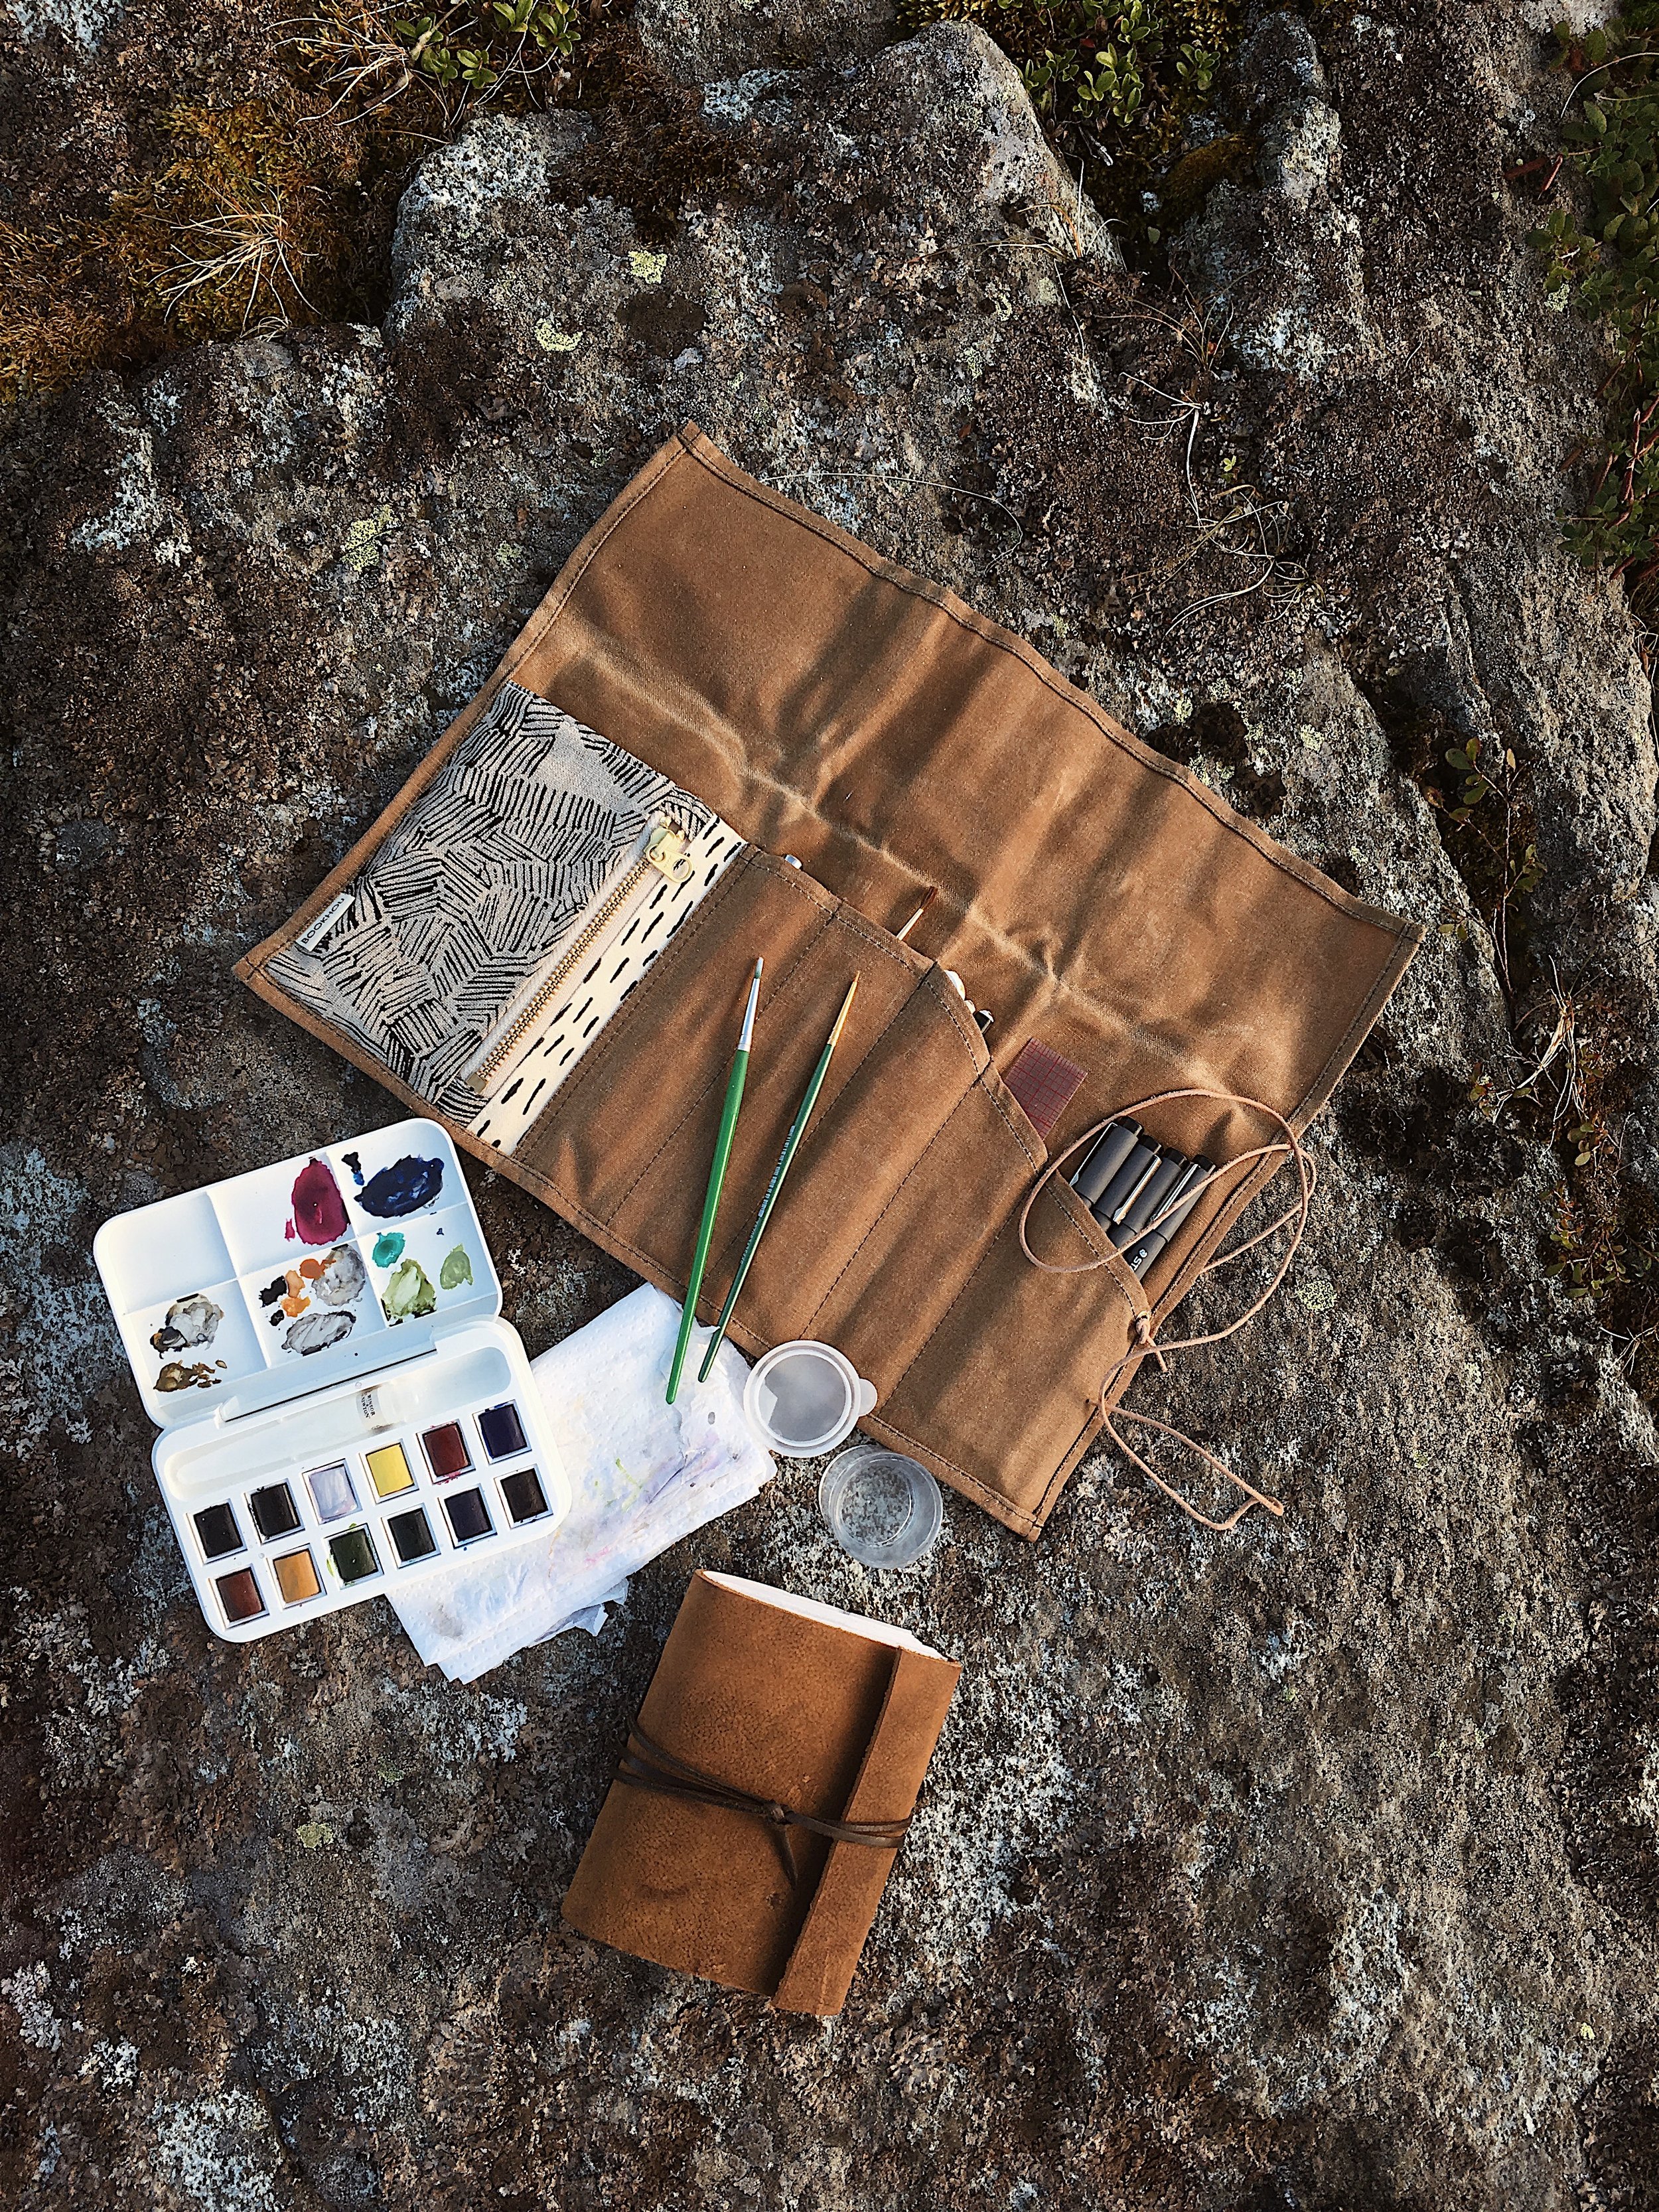 Natural Pigment Watercolor Travel Kit (as seen in Oprah Magazine) — L'Ecole  Des Beaux Arts